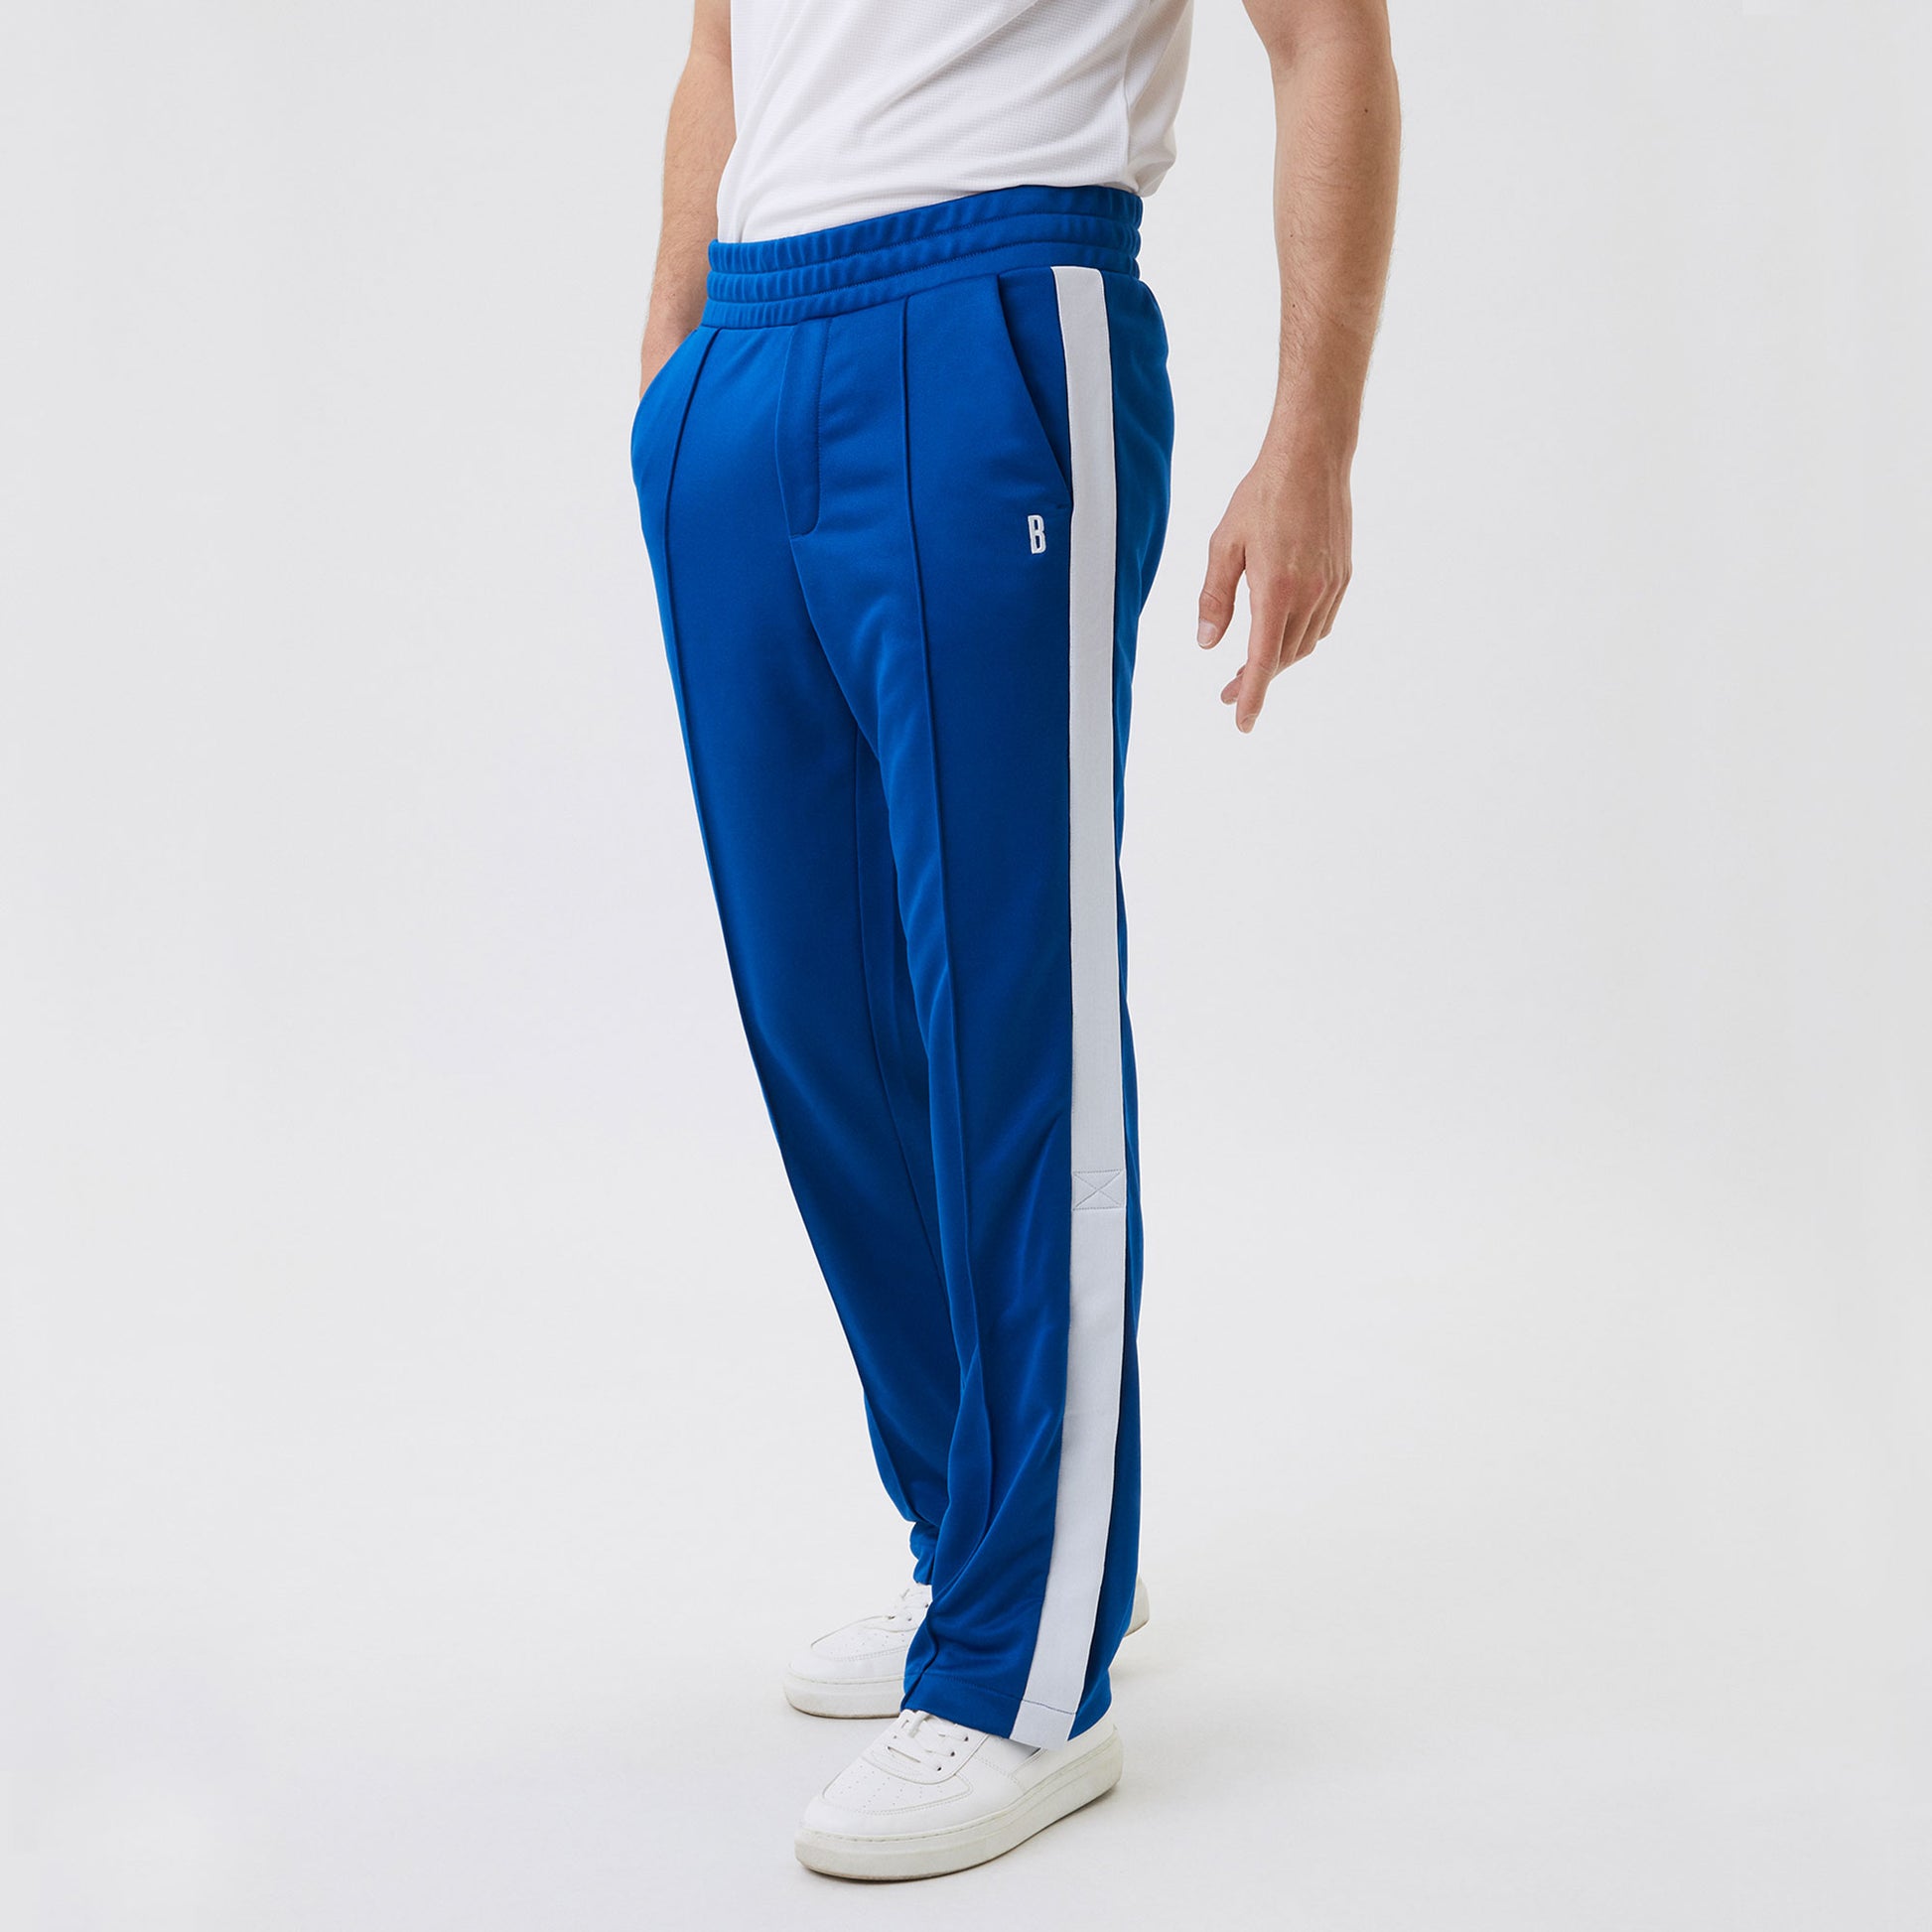 Björn Borg Ace Men's Tennis Pants Blue (1)